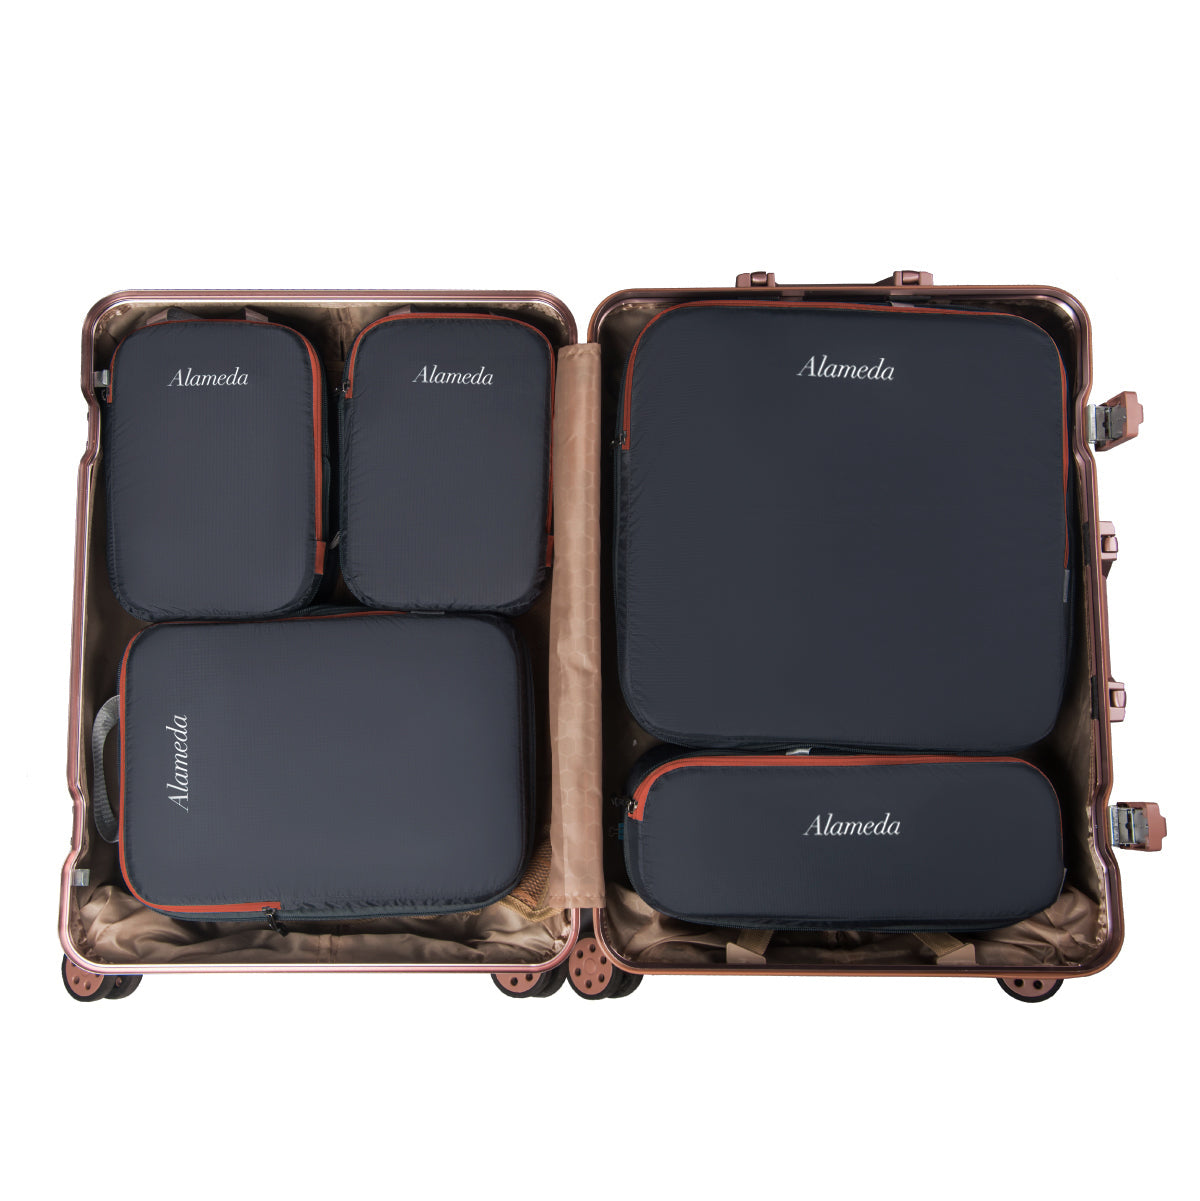 GreyFox 6 in 1 Foldable Travel Organizer Bag Set Travel Packing Luggage  Organizer Bags 6 pcs